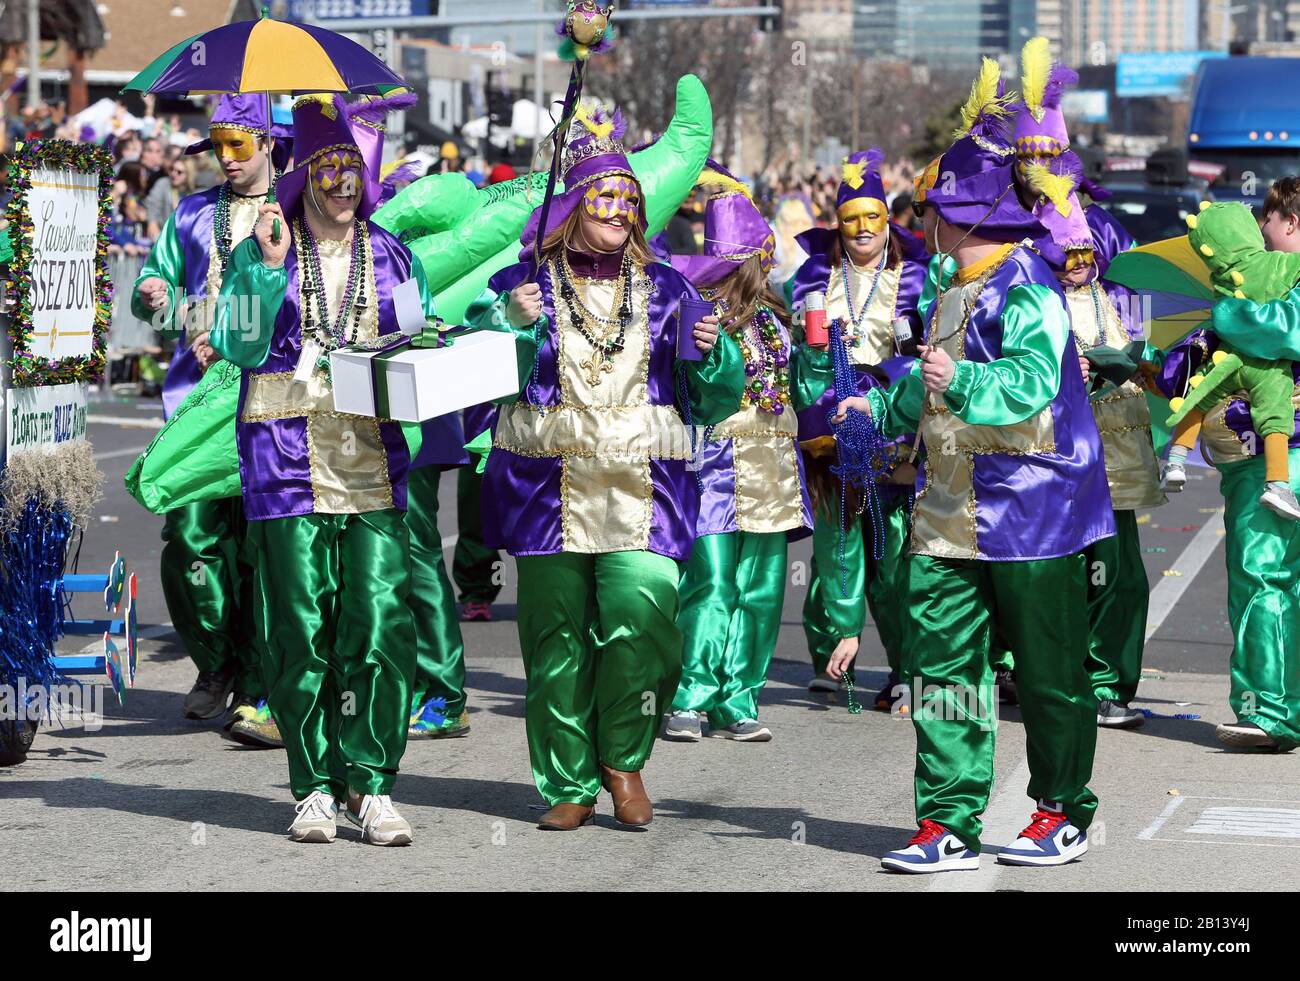 St. Louis, Estados Unidos. 22 de febrero de 2020. Participantes en el desfile de disfraces en el desfile de St. Louis Mardi Gras en St. Louis el sábado, 22 de febrero de 2020. Foto de Bill Greenblatt/UPI crédito: UPI/Alamy Live News Foto de stock